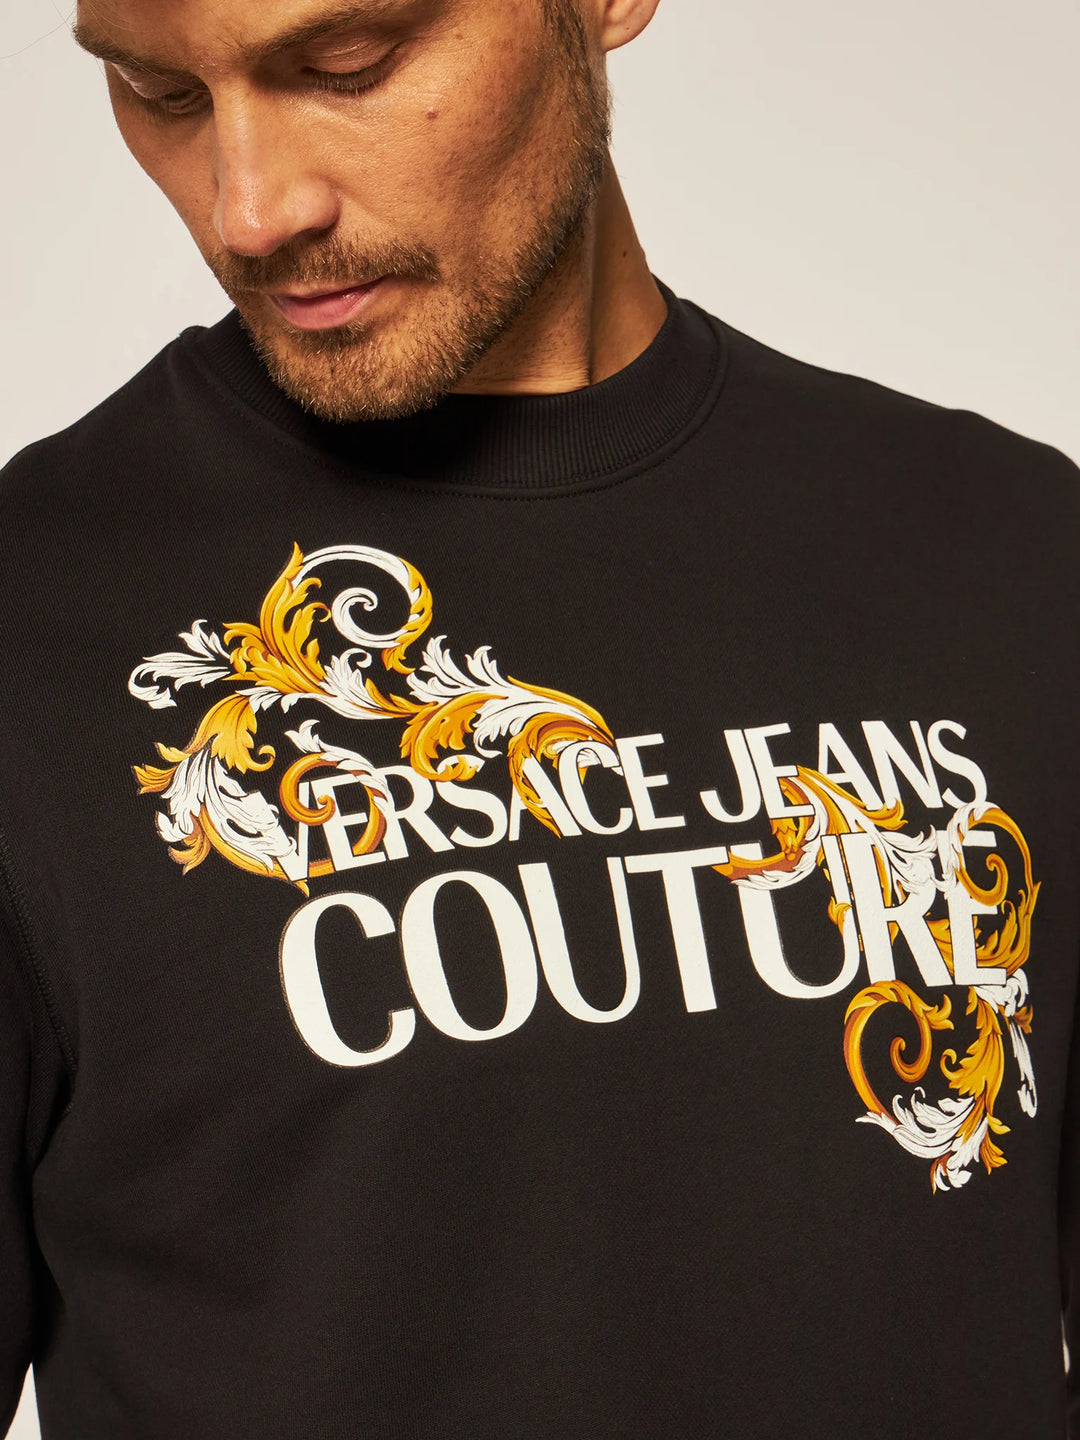 VERSACE JEANS COUTURE Black Baroque Print Sweatshirt Veronique Luxury Collections